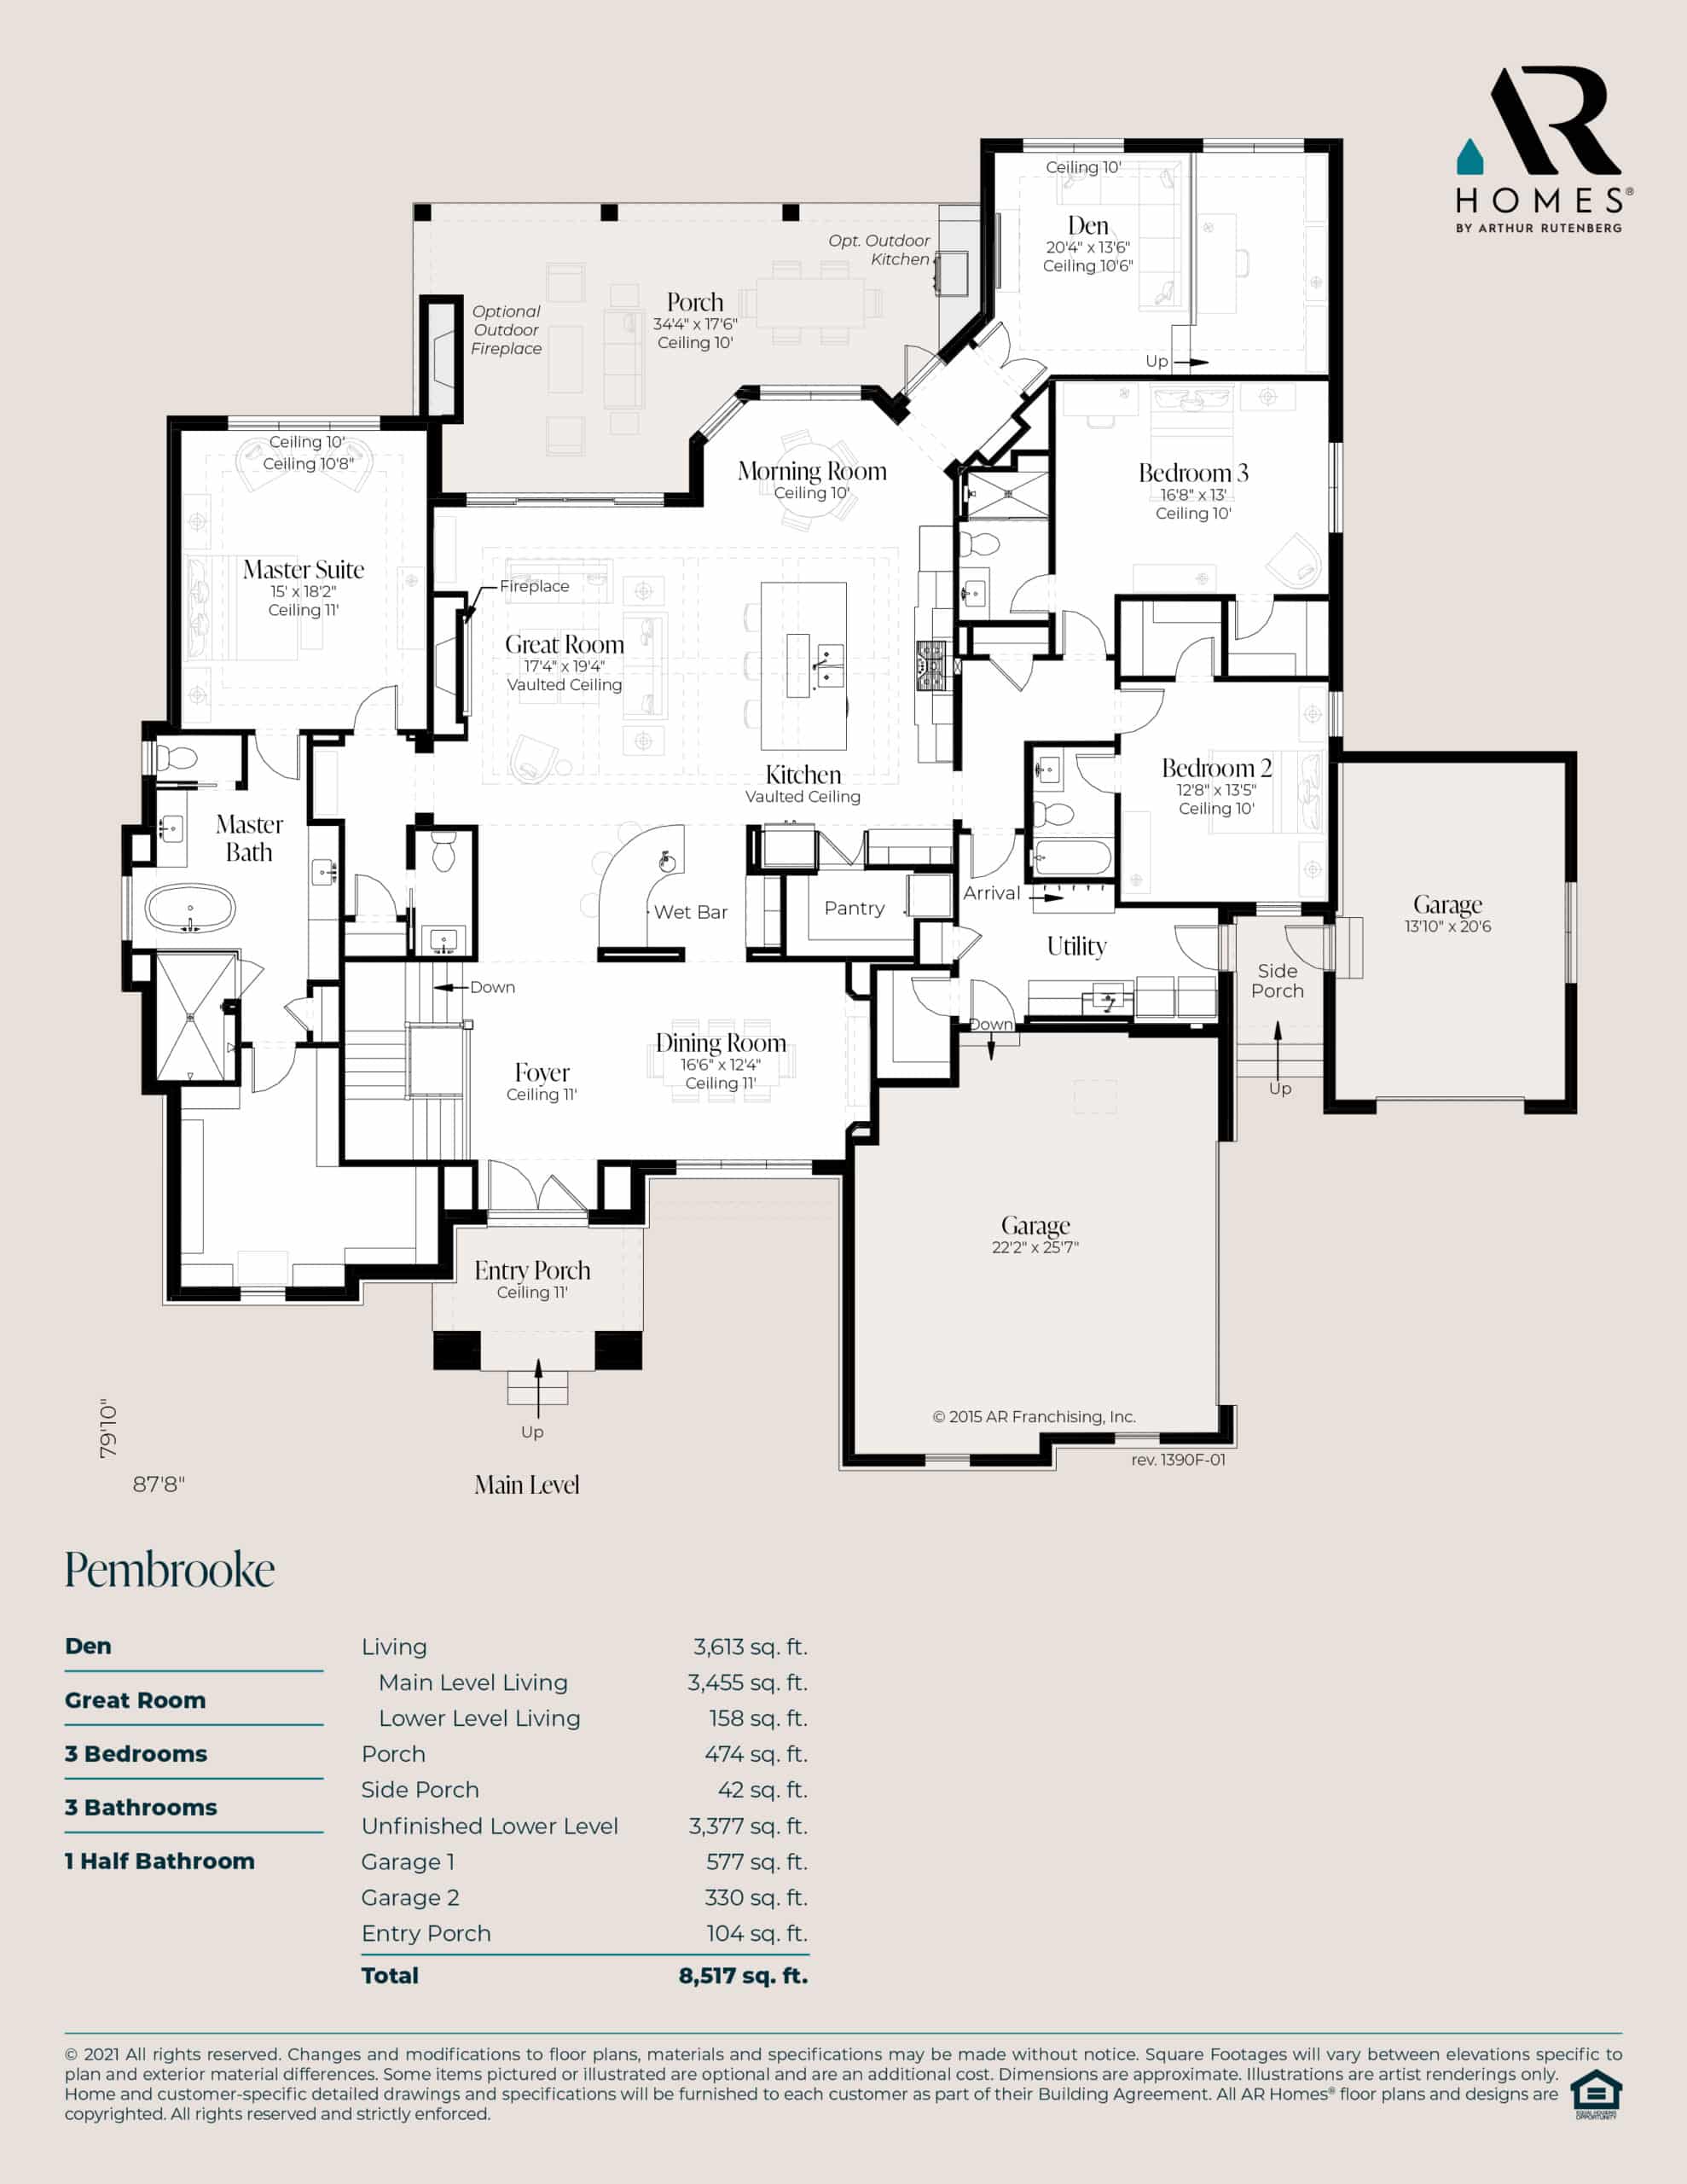 The Pembrooke Plan Ar Homes By Arthur Rutenberg